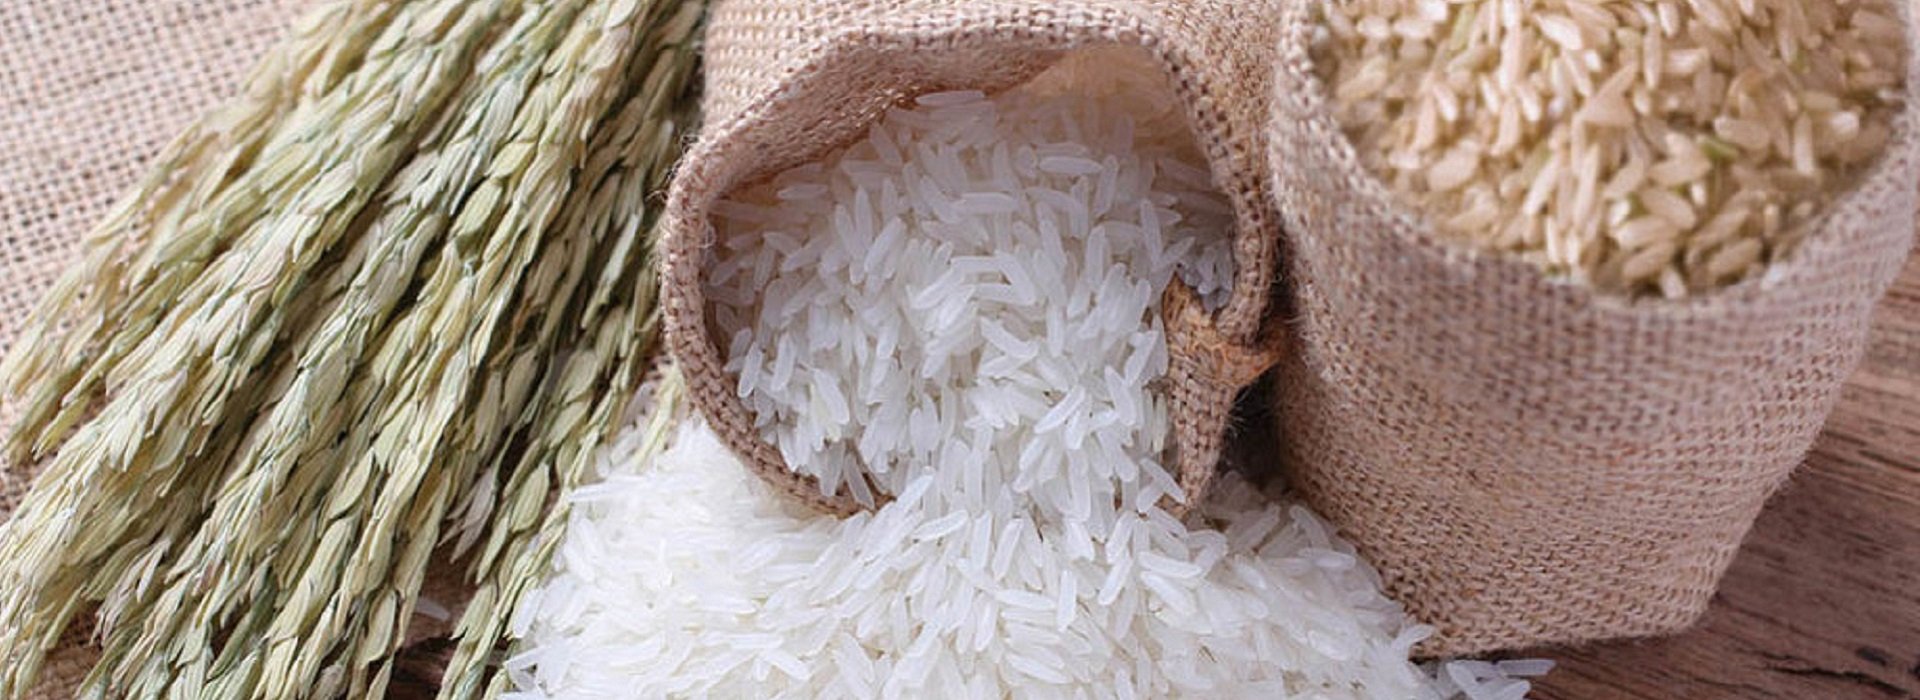 Rice purity. Рис басмати растение. Рис басмати колосок. Рис баннер. Колосья риса.